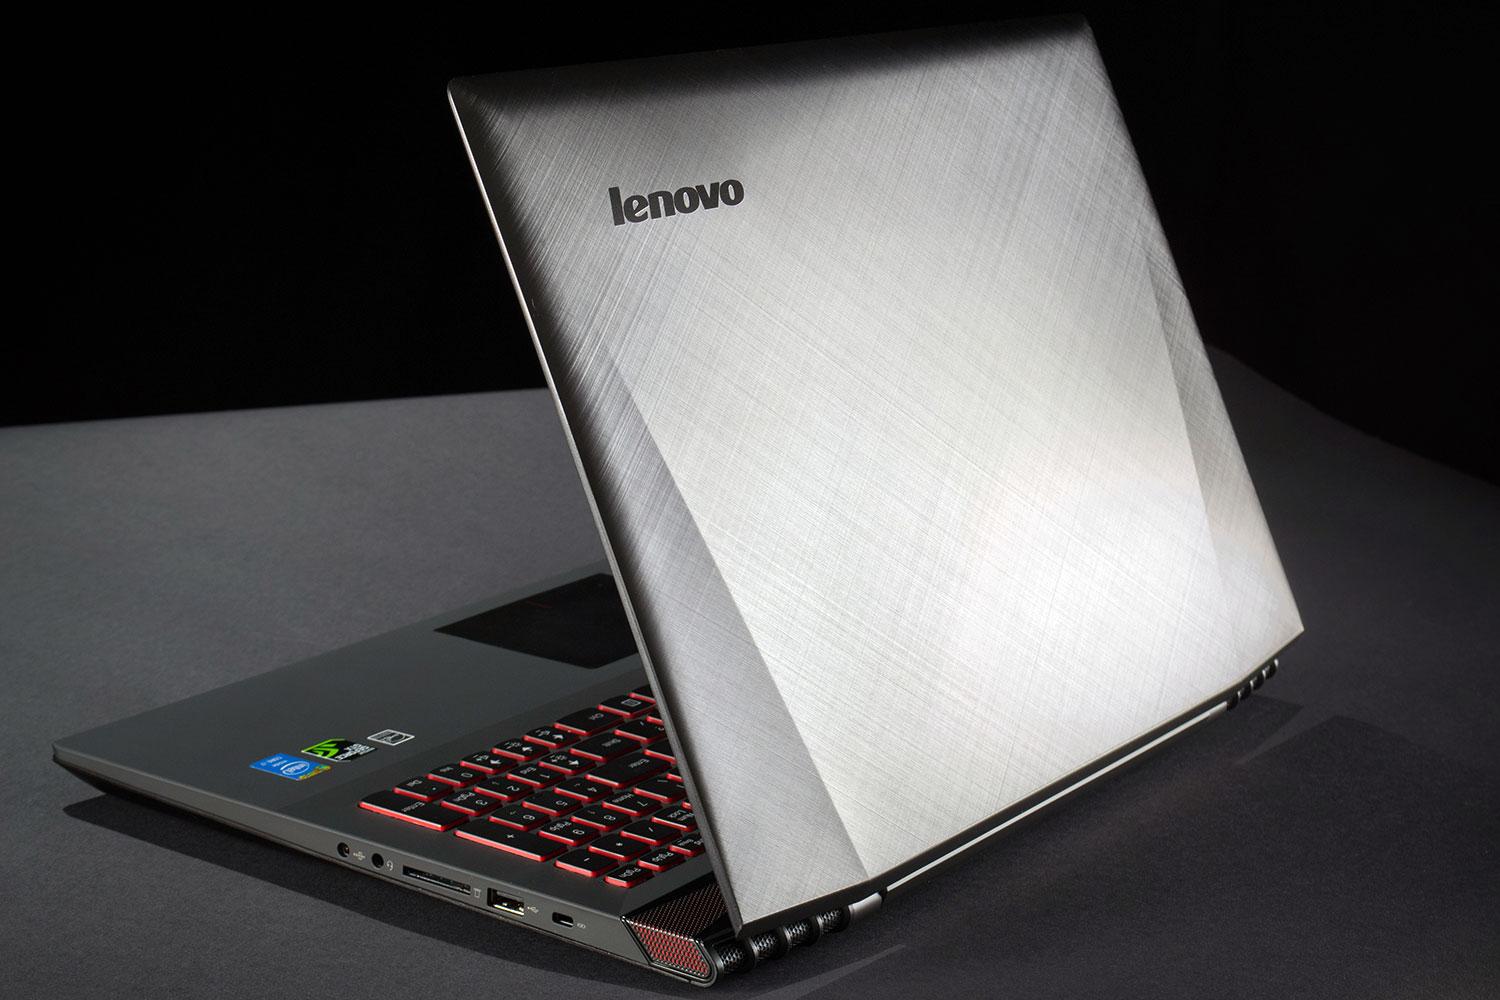 Lenovo IdeaPad Y50p review | Digital Trends